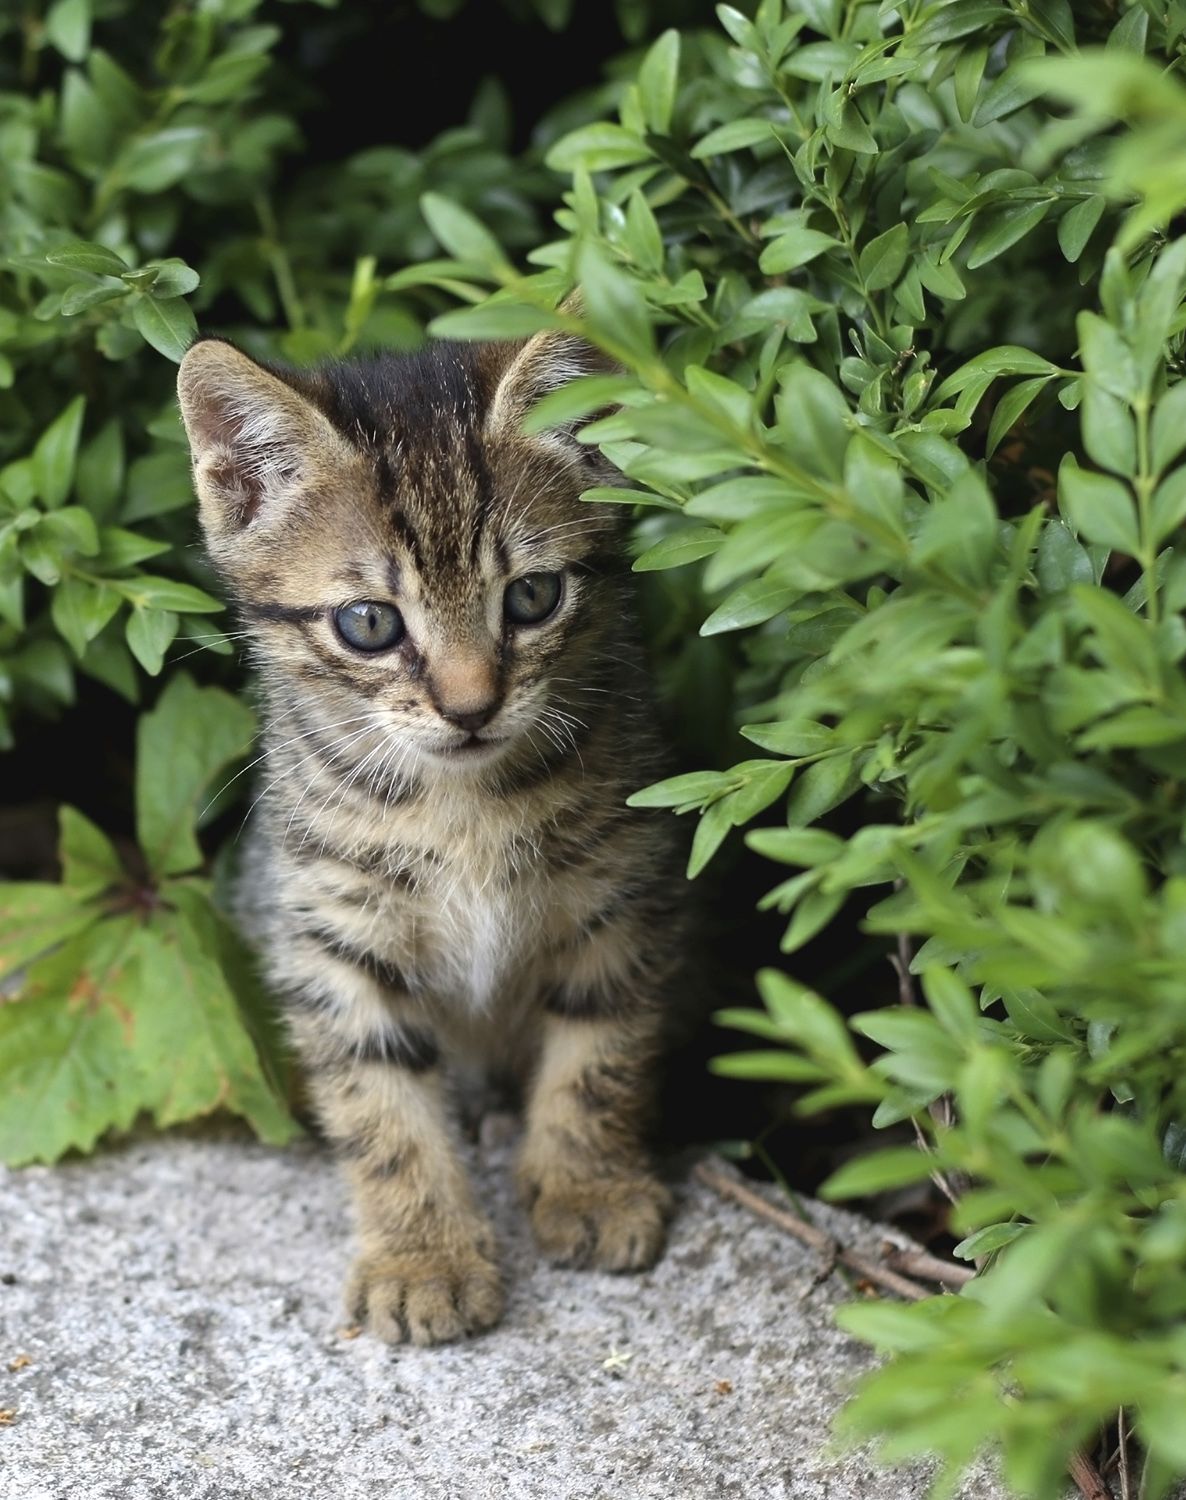 Kitten in garden.